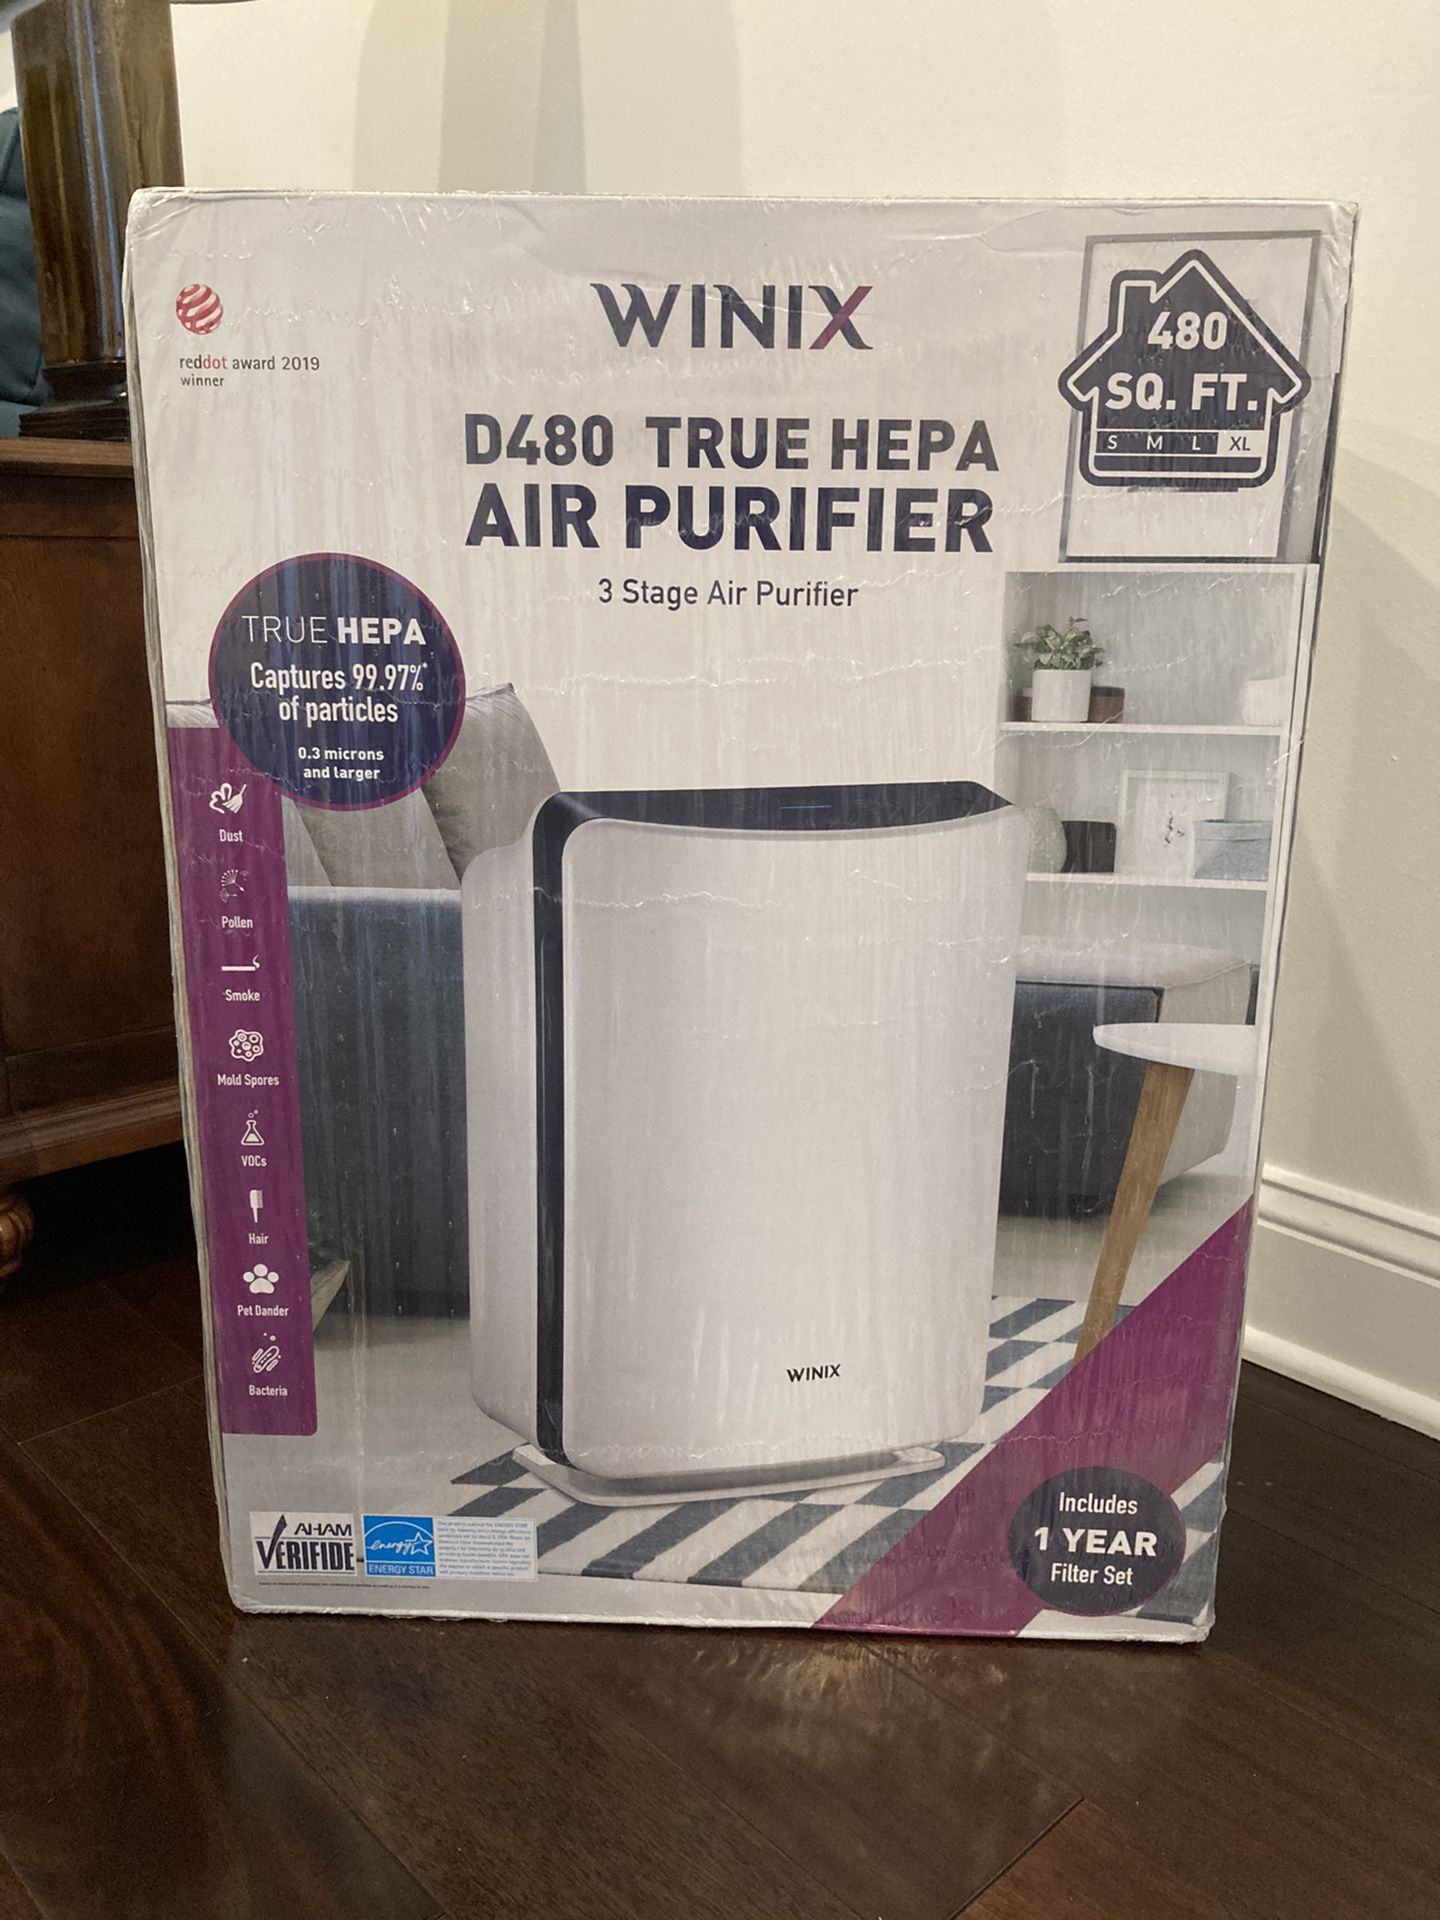 WINIX D480 TRUE HEPA AIR PURIFIER